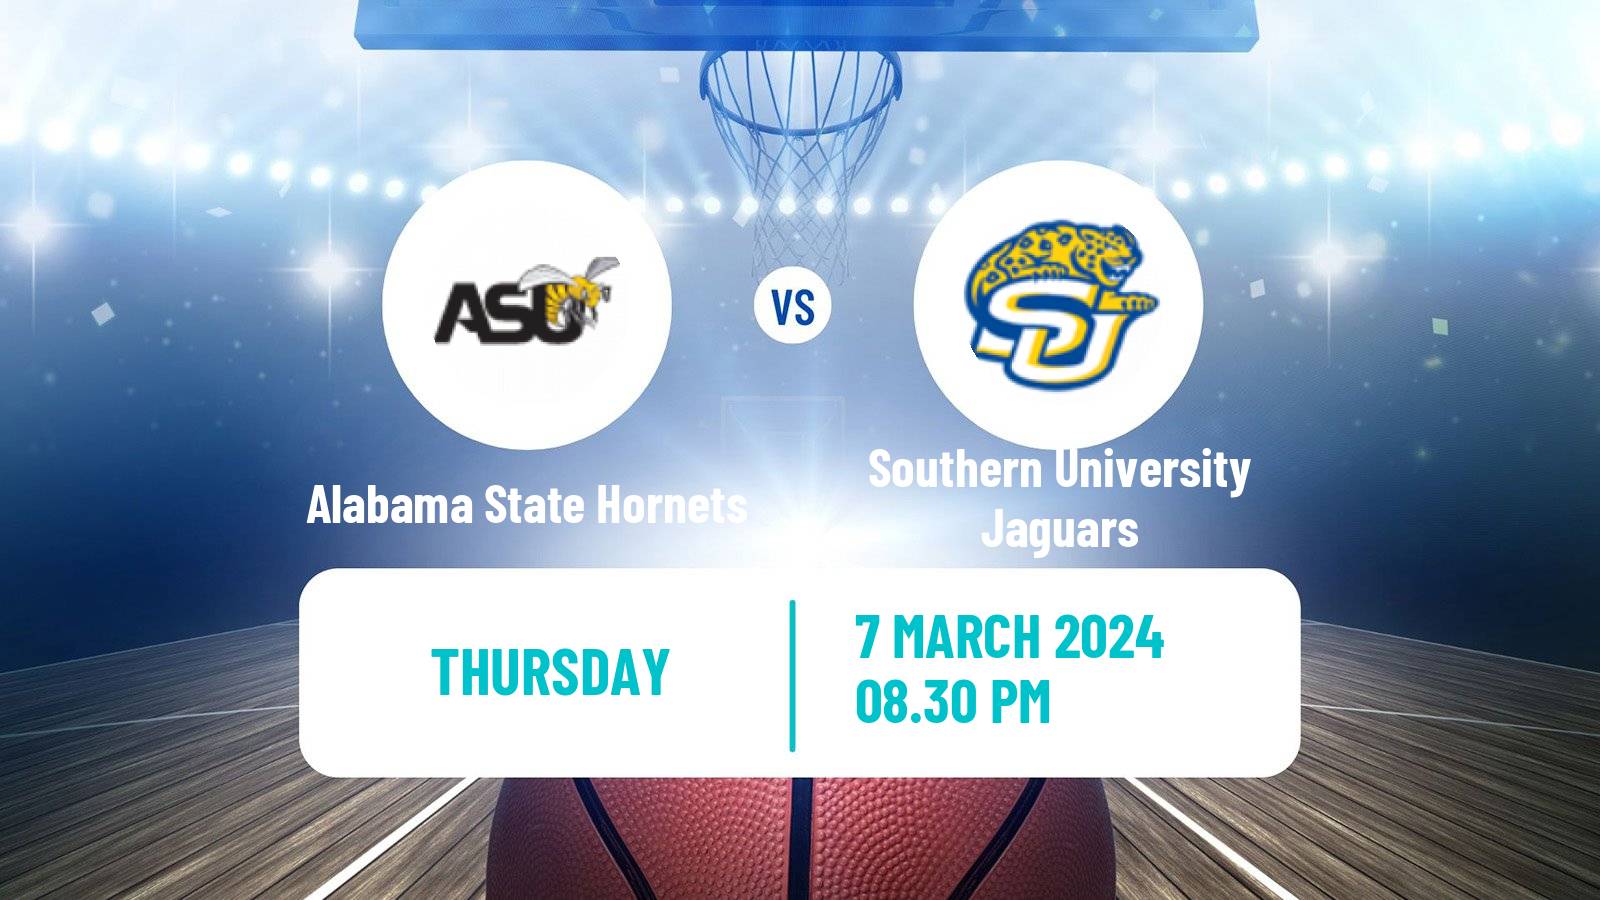 Basketball NCAA College Basketball Alabama State Hornets - Southern University Jaguars